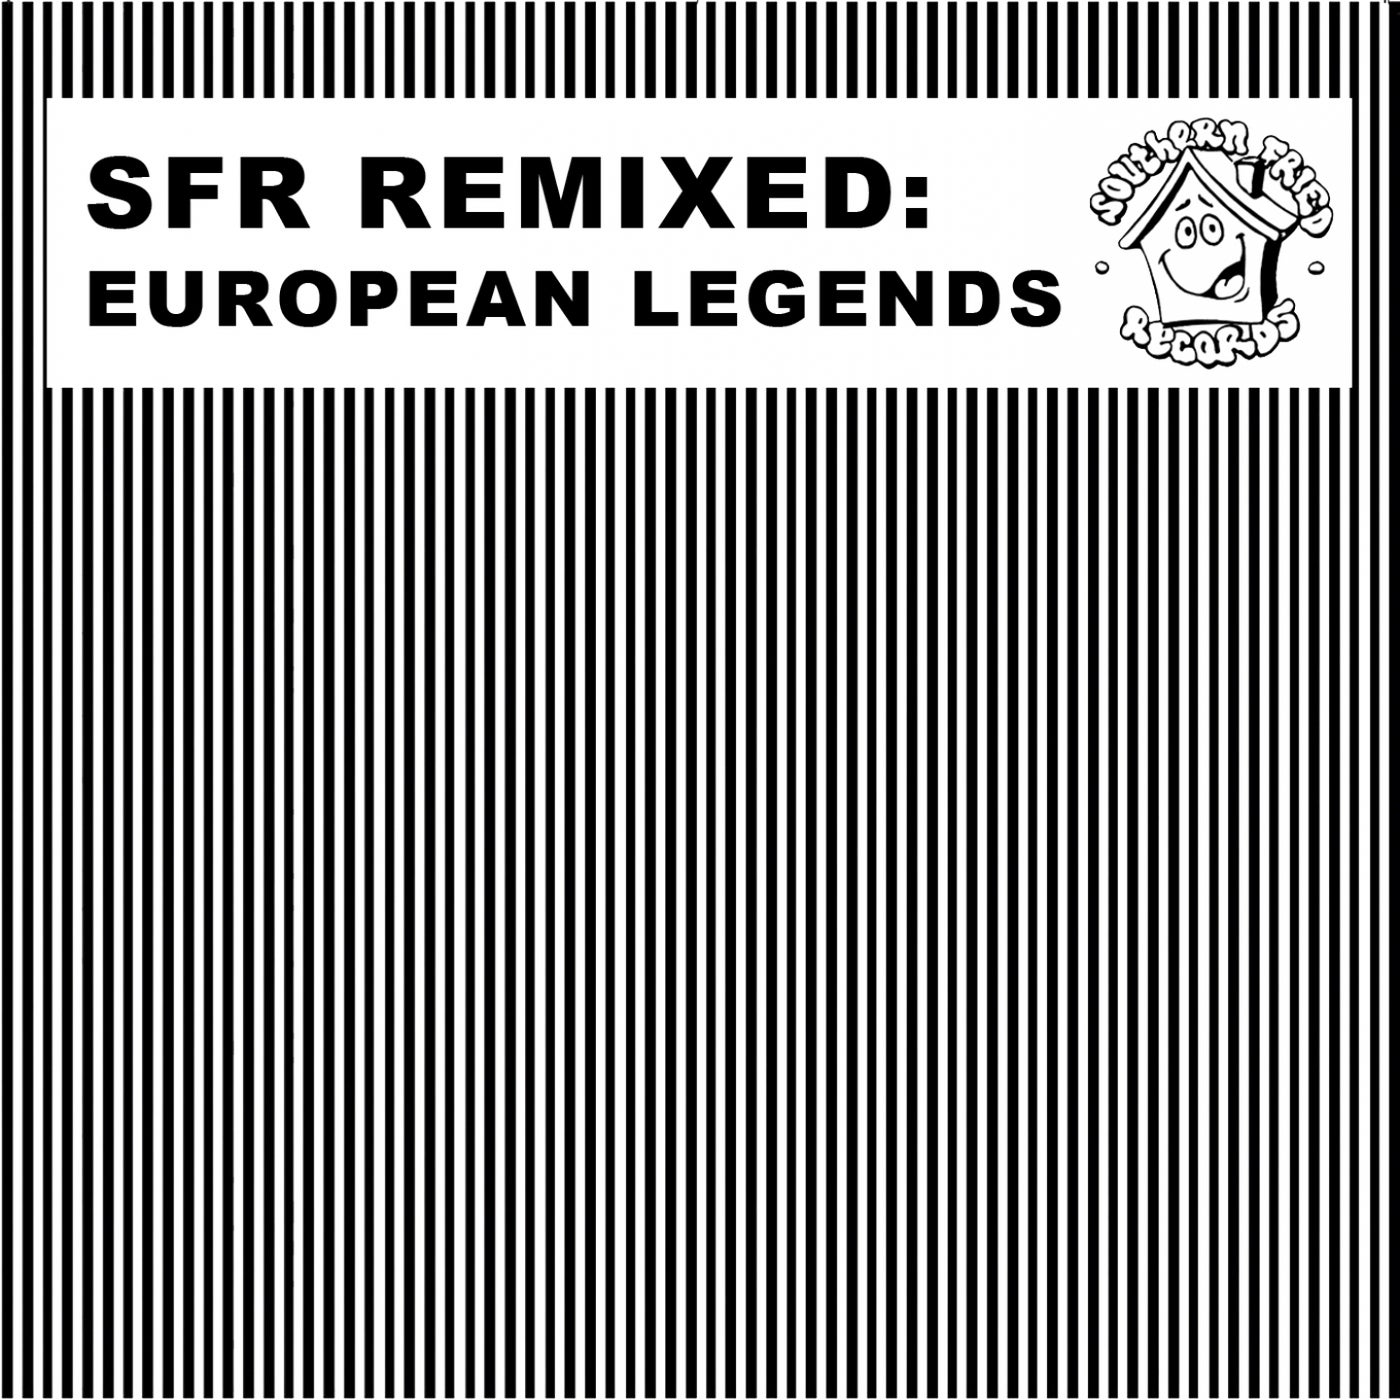 SFR Remixed